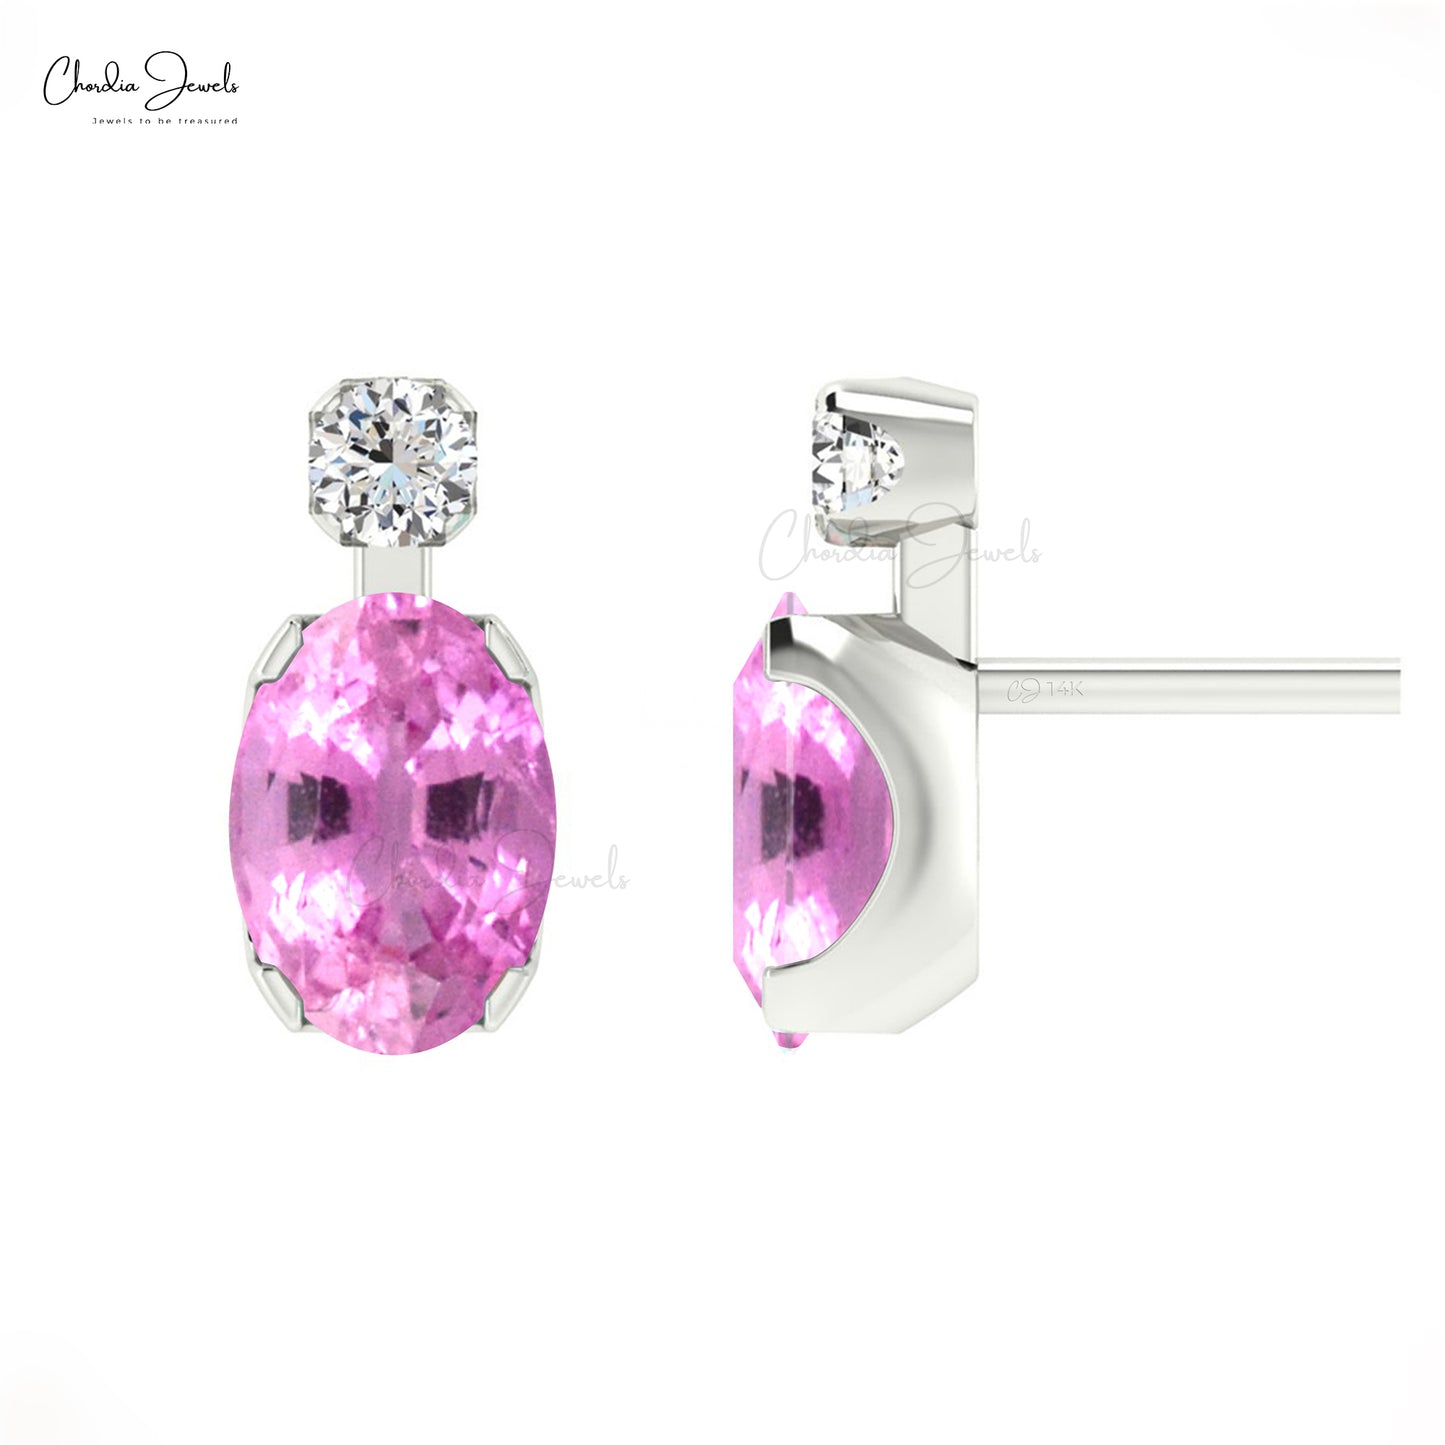 Buy Pink Sapphire Earrings